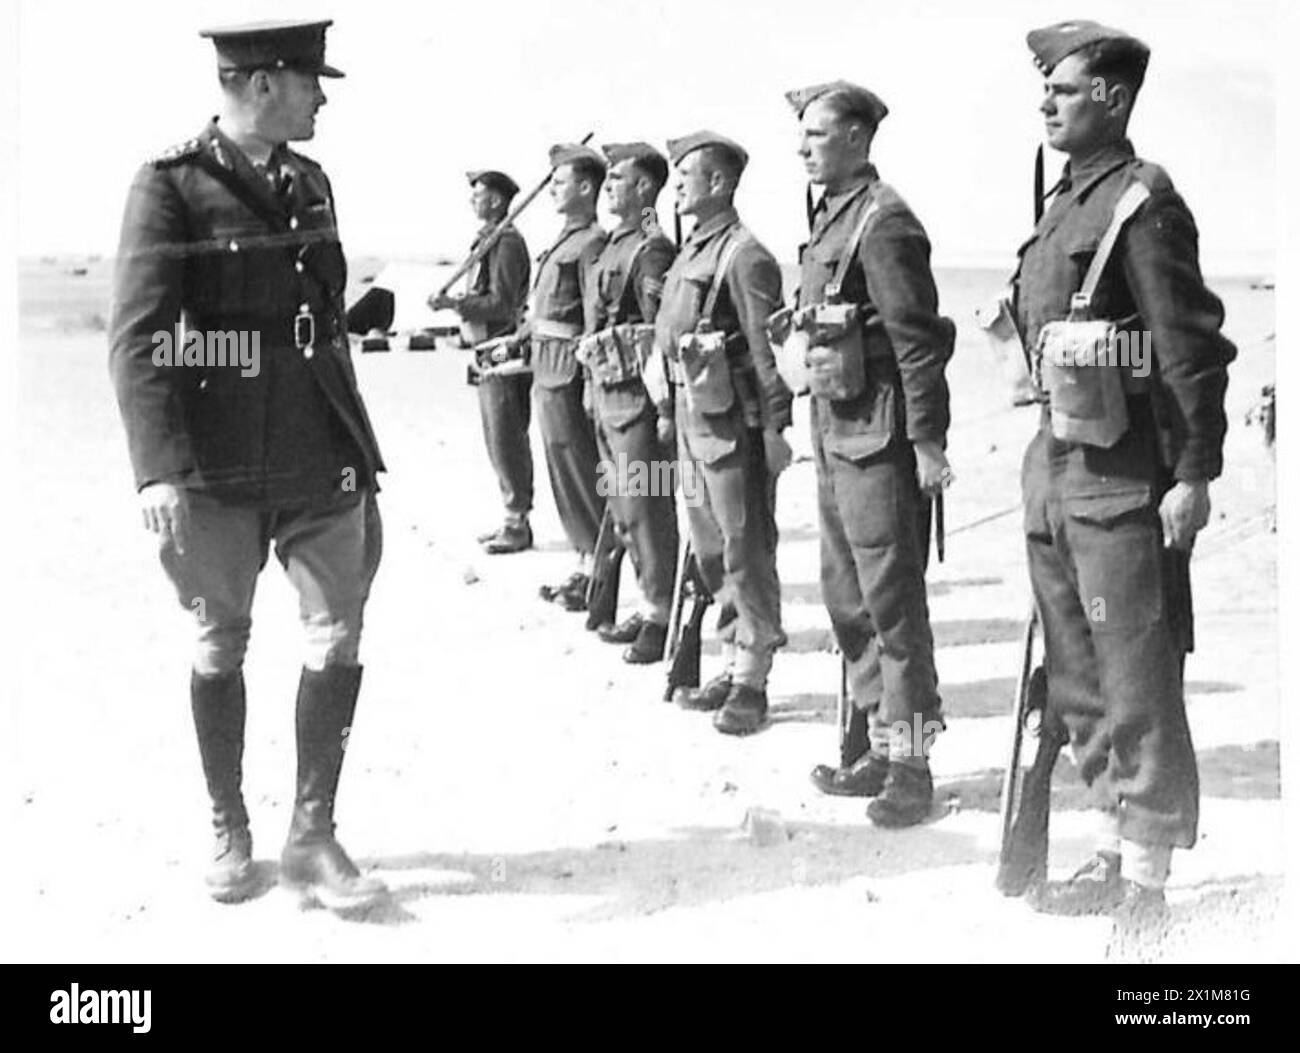 C-IN-C's TOUR OF 10TH ARMY - C-in-C inspects men at 10th Div. H.Q, British Army Stock Photo